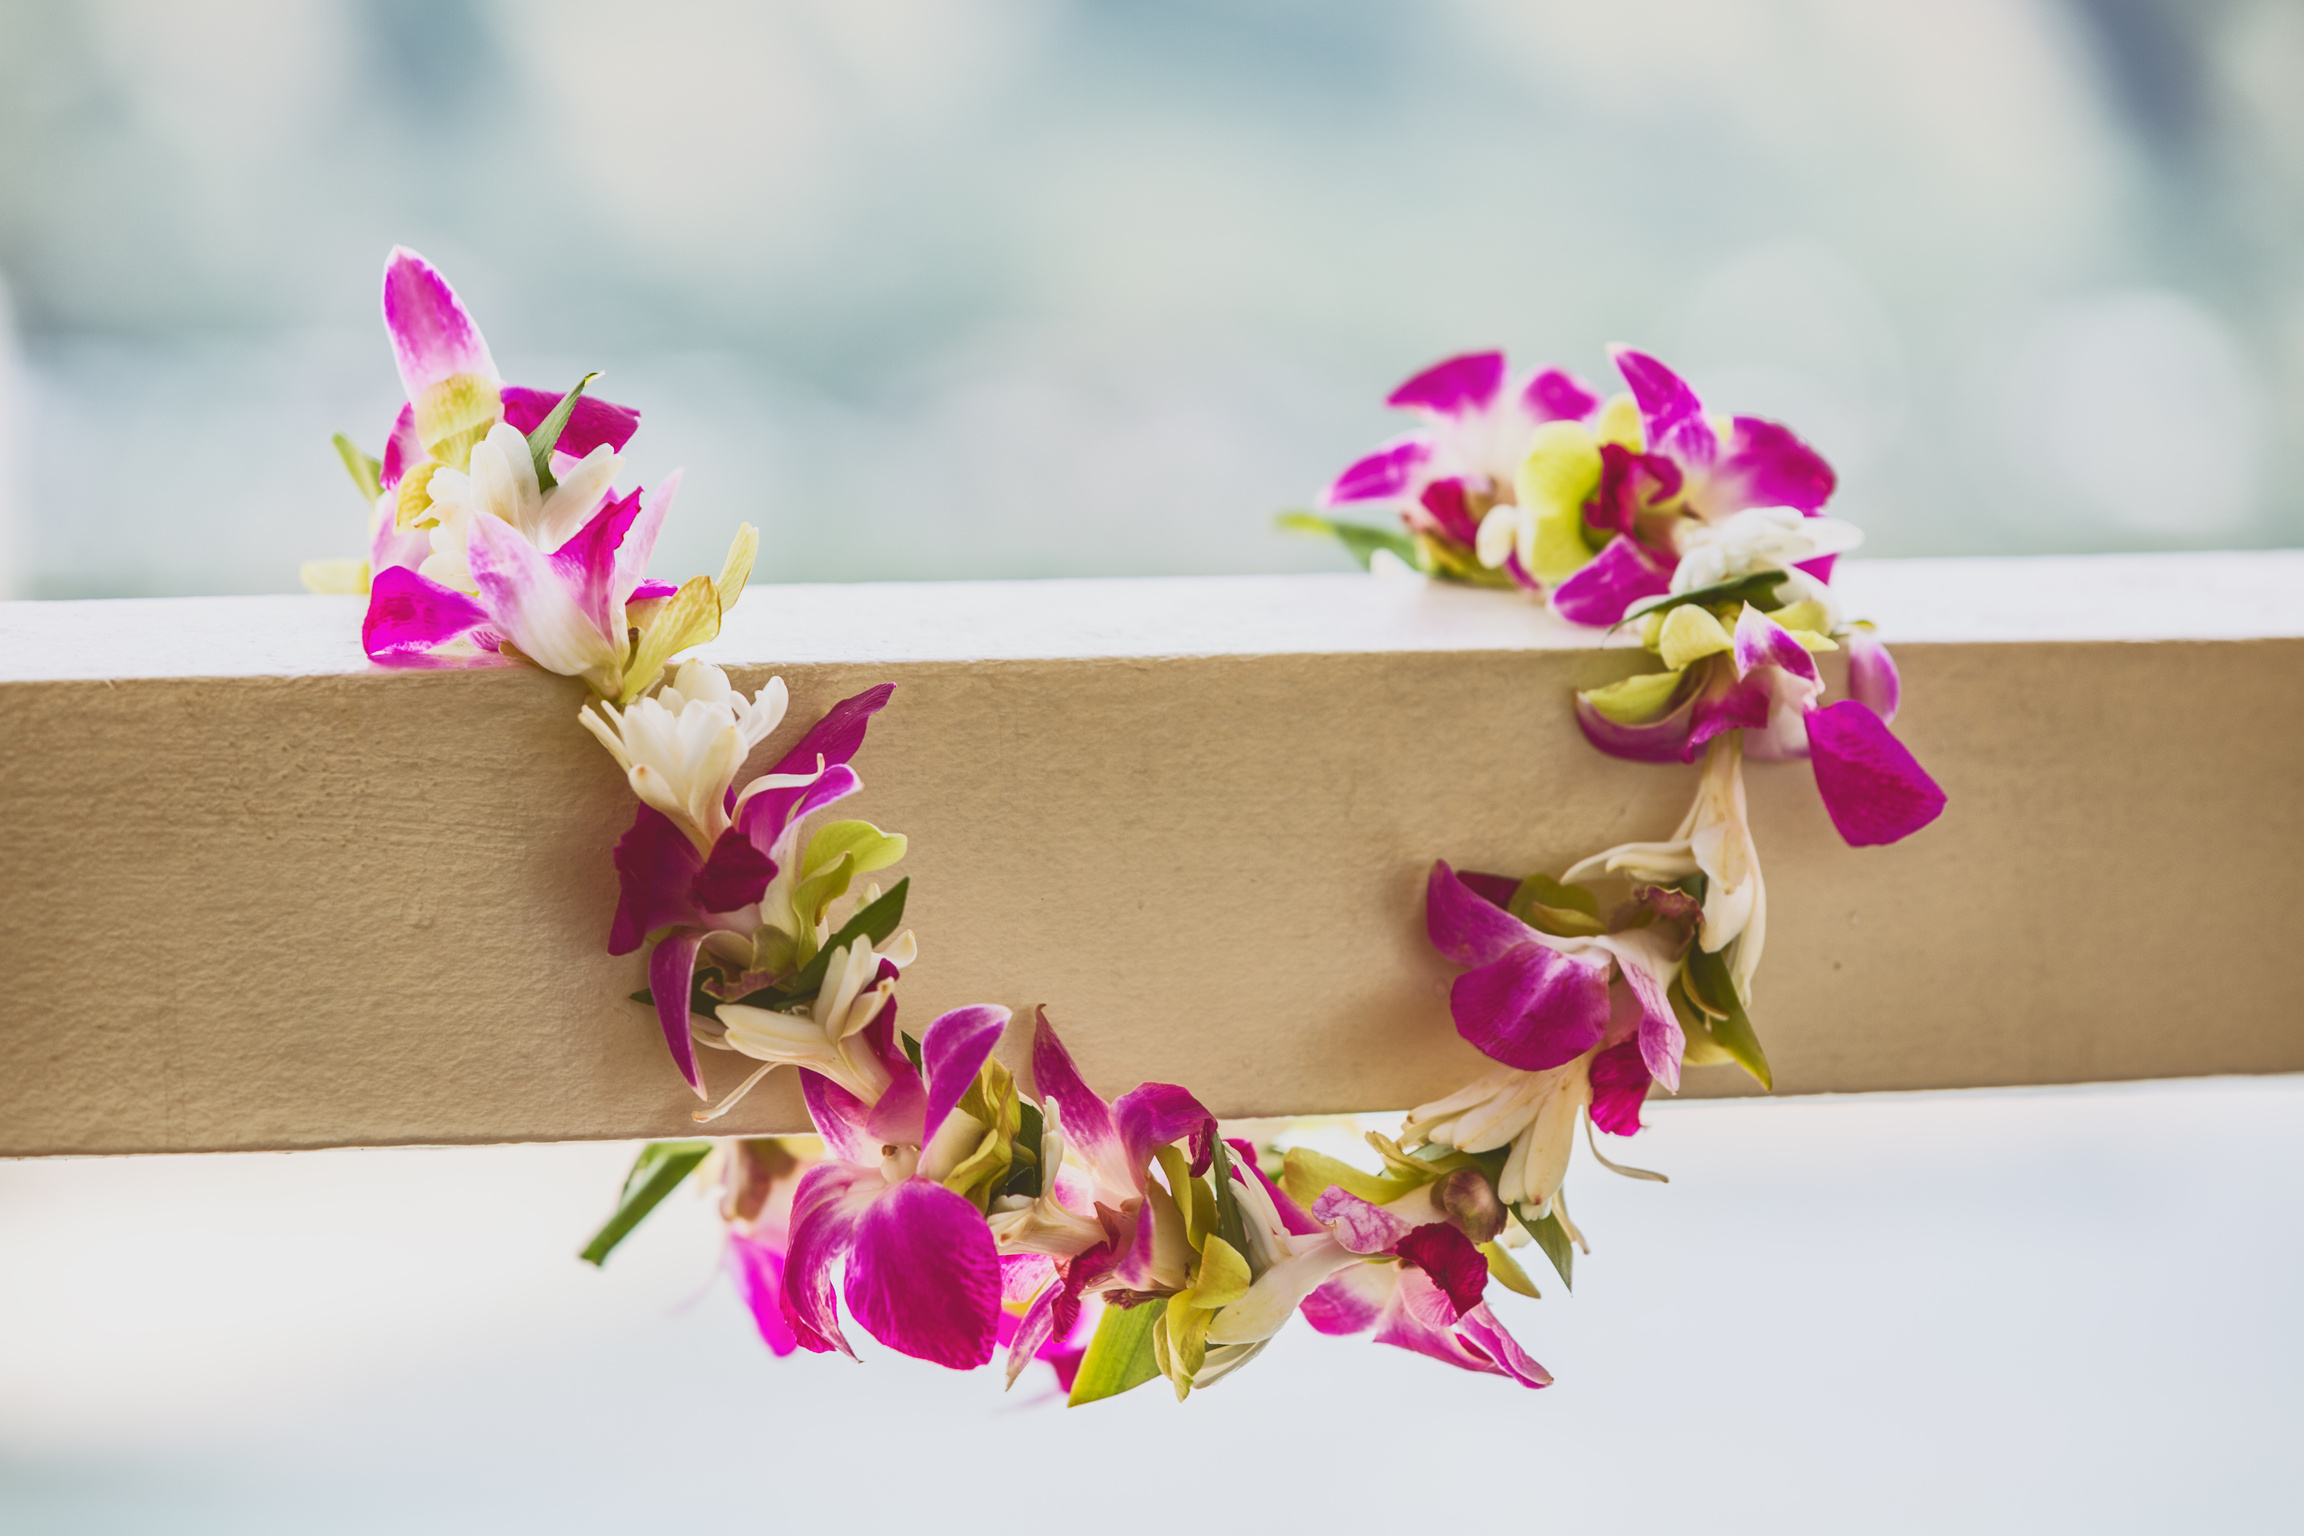 Hawaii Luau Icon Travel Concept: Fresh Lei Flowers Necklace, Kauai Hawaiian Island Tropical Vacation Background